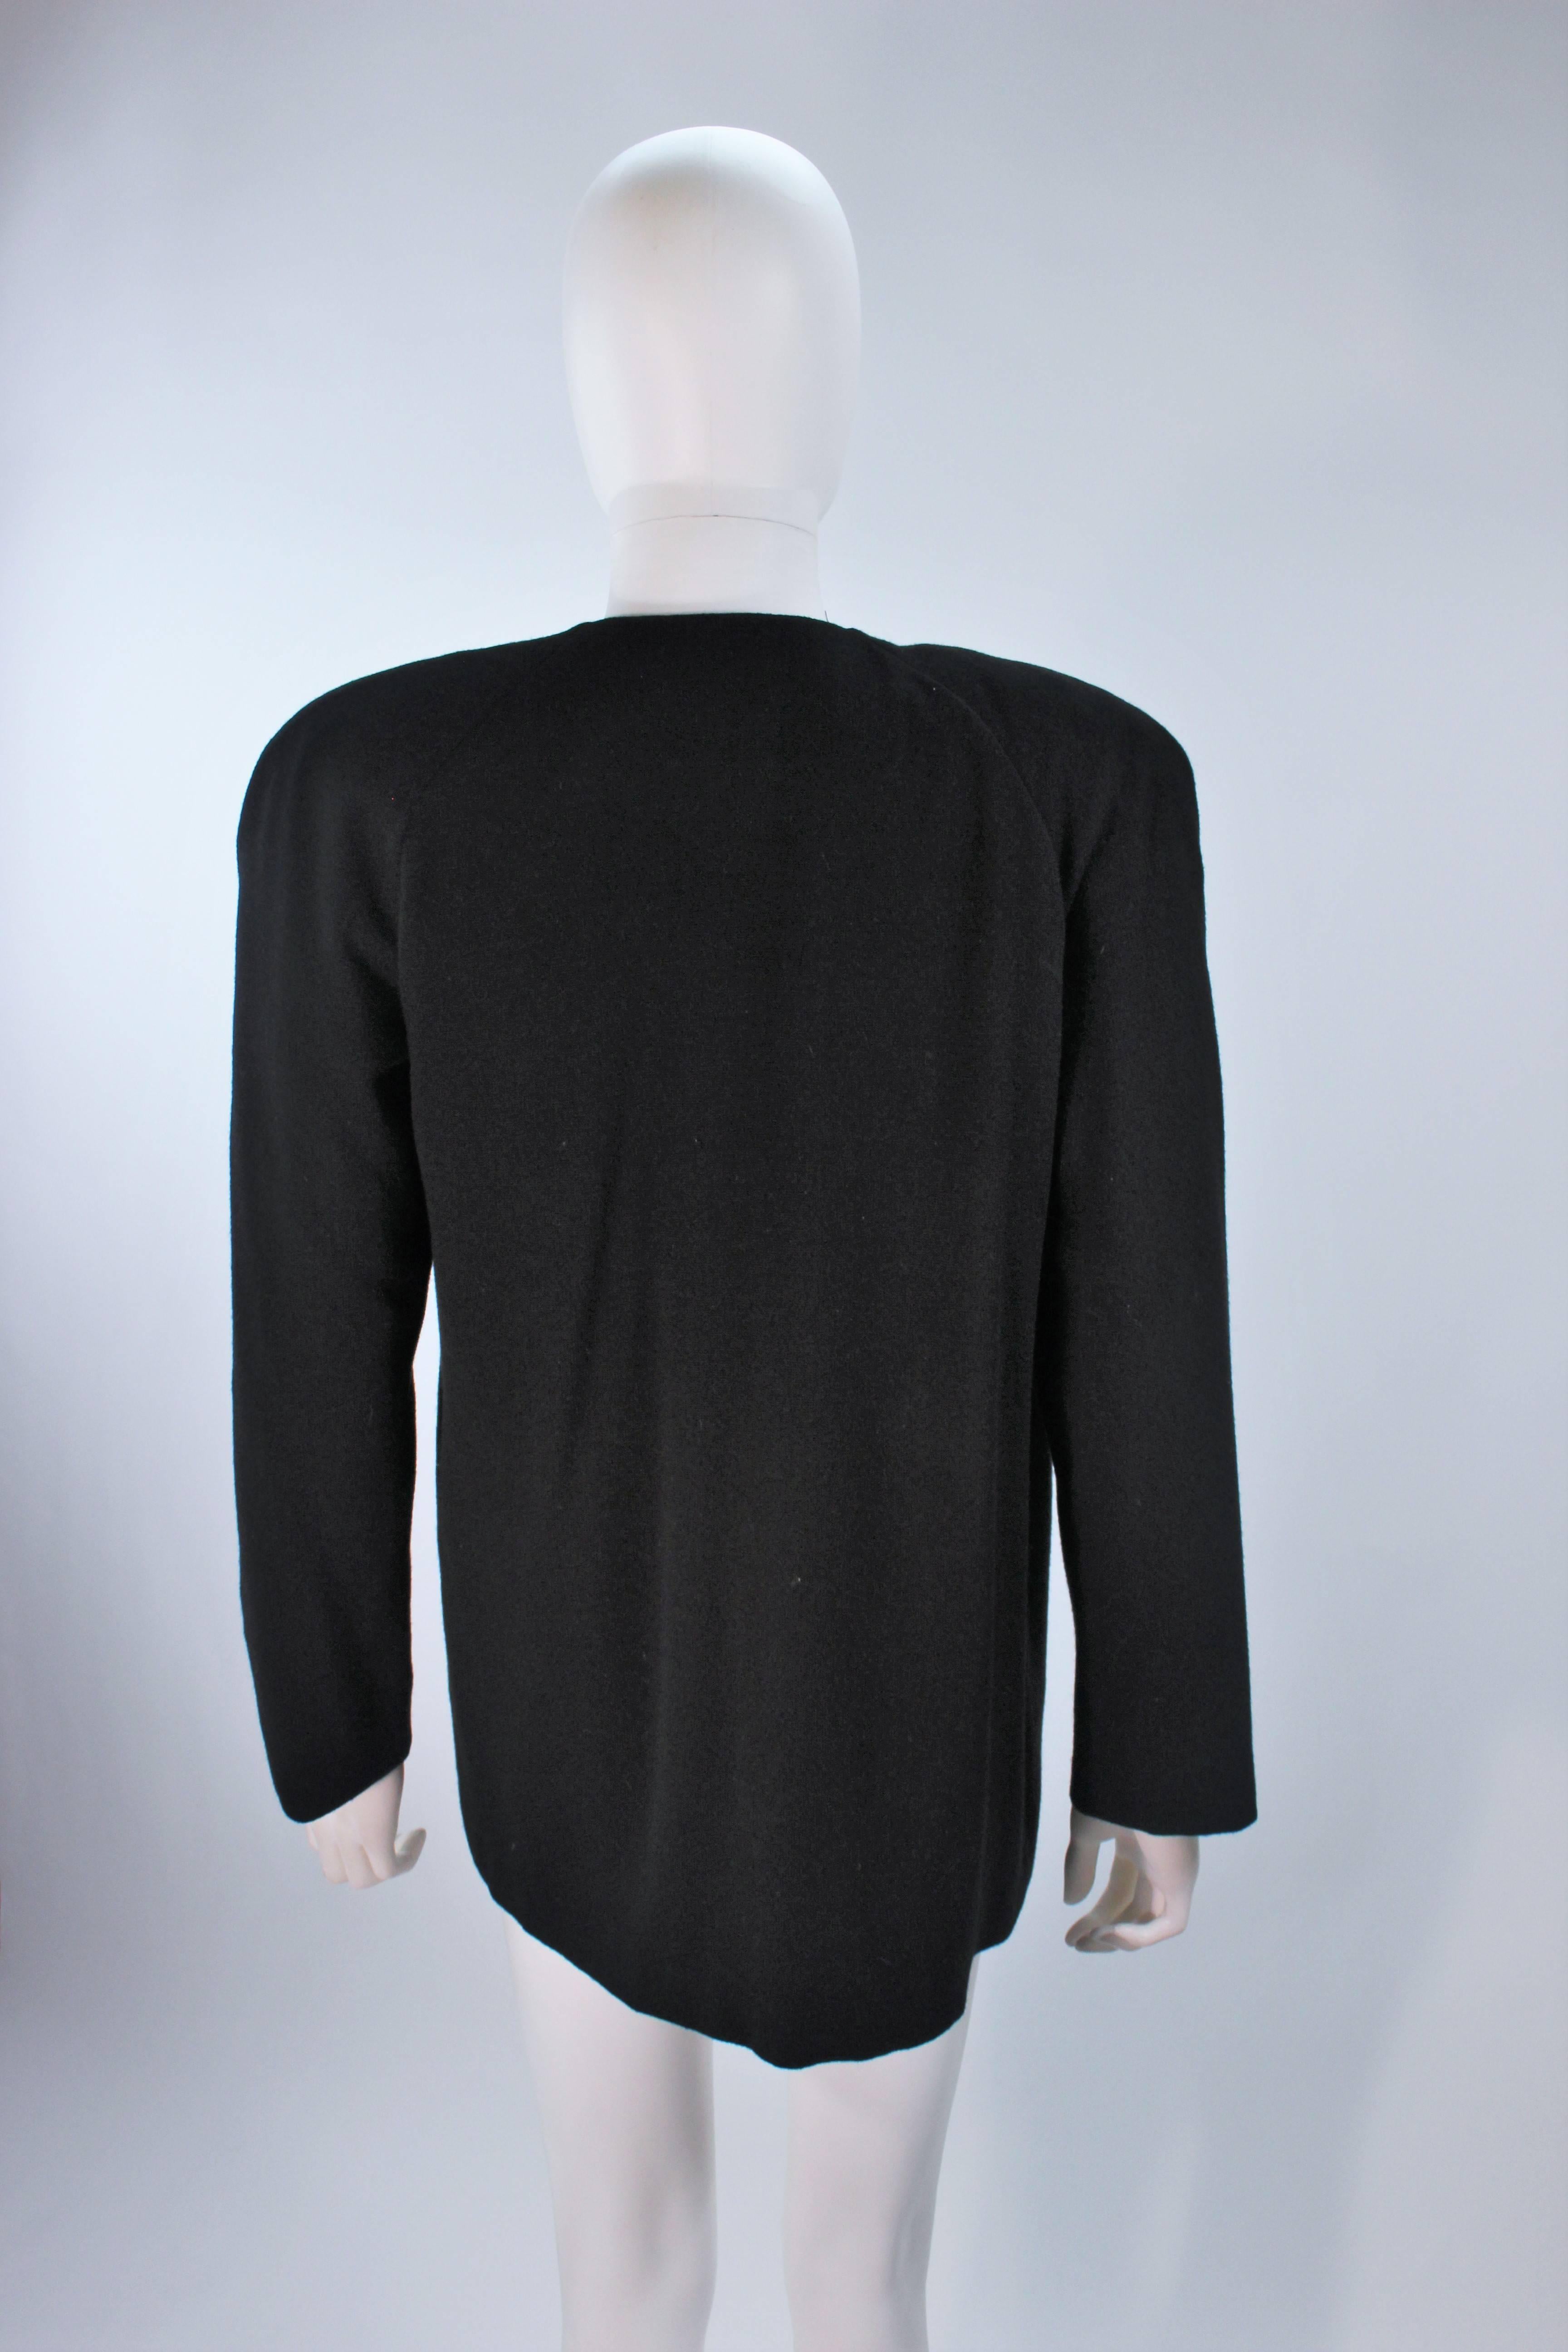 CAROLYN ROEHM Black Knit Wool Jacket with Rhinestone Applique Size 6-10 4